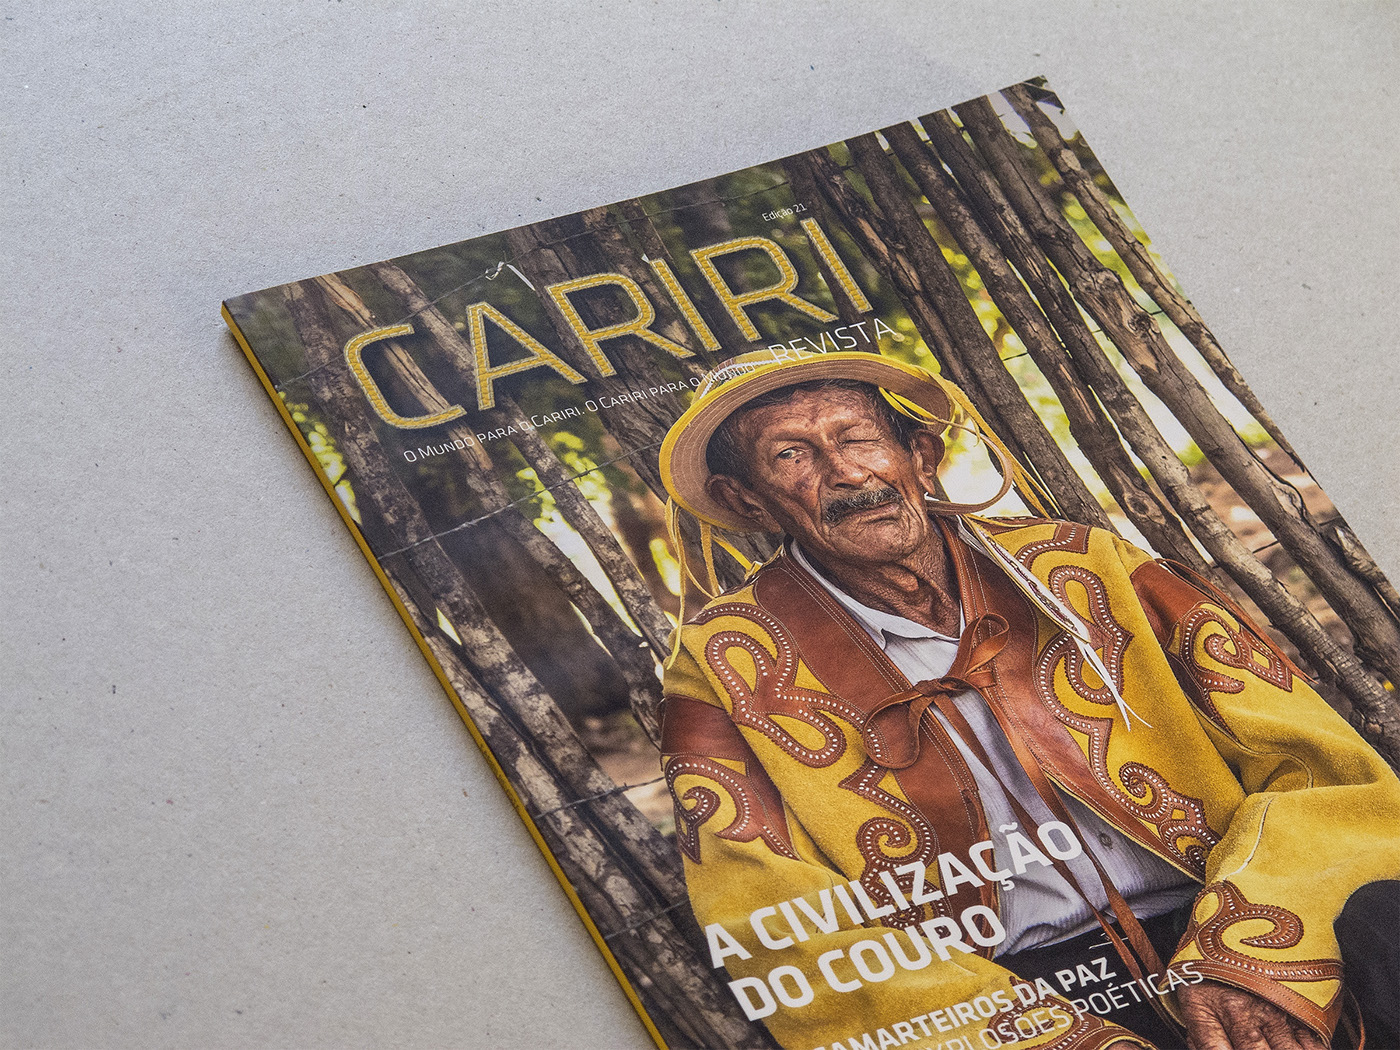 Adobe Portfolio magazine revista cariri ceará Layout publisher publishing   InDesign editorial